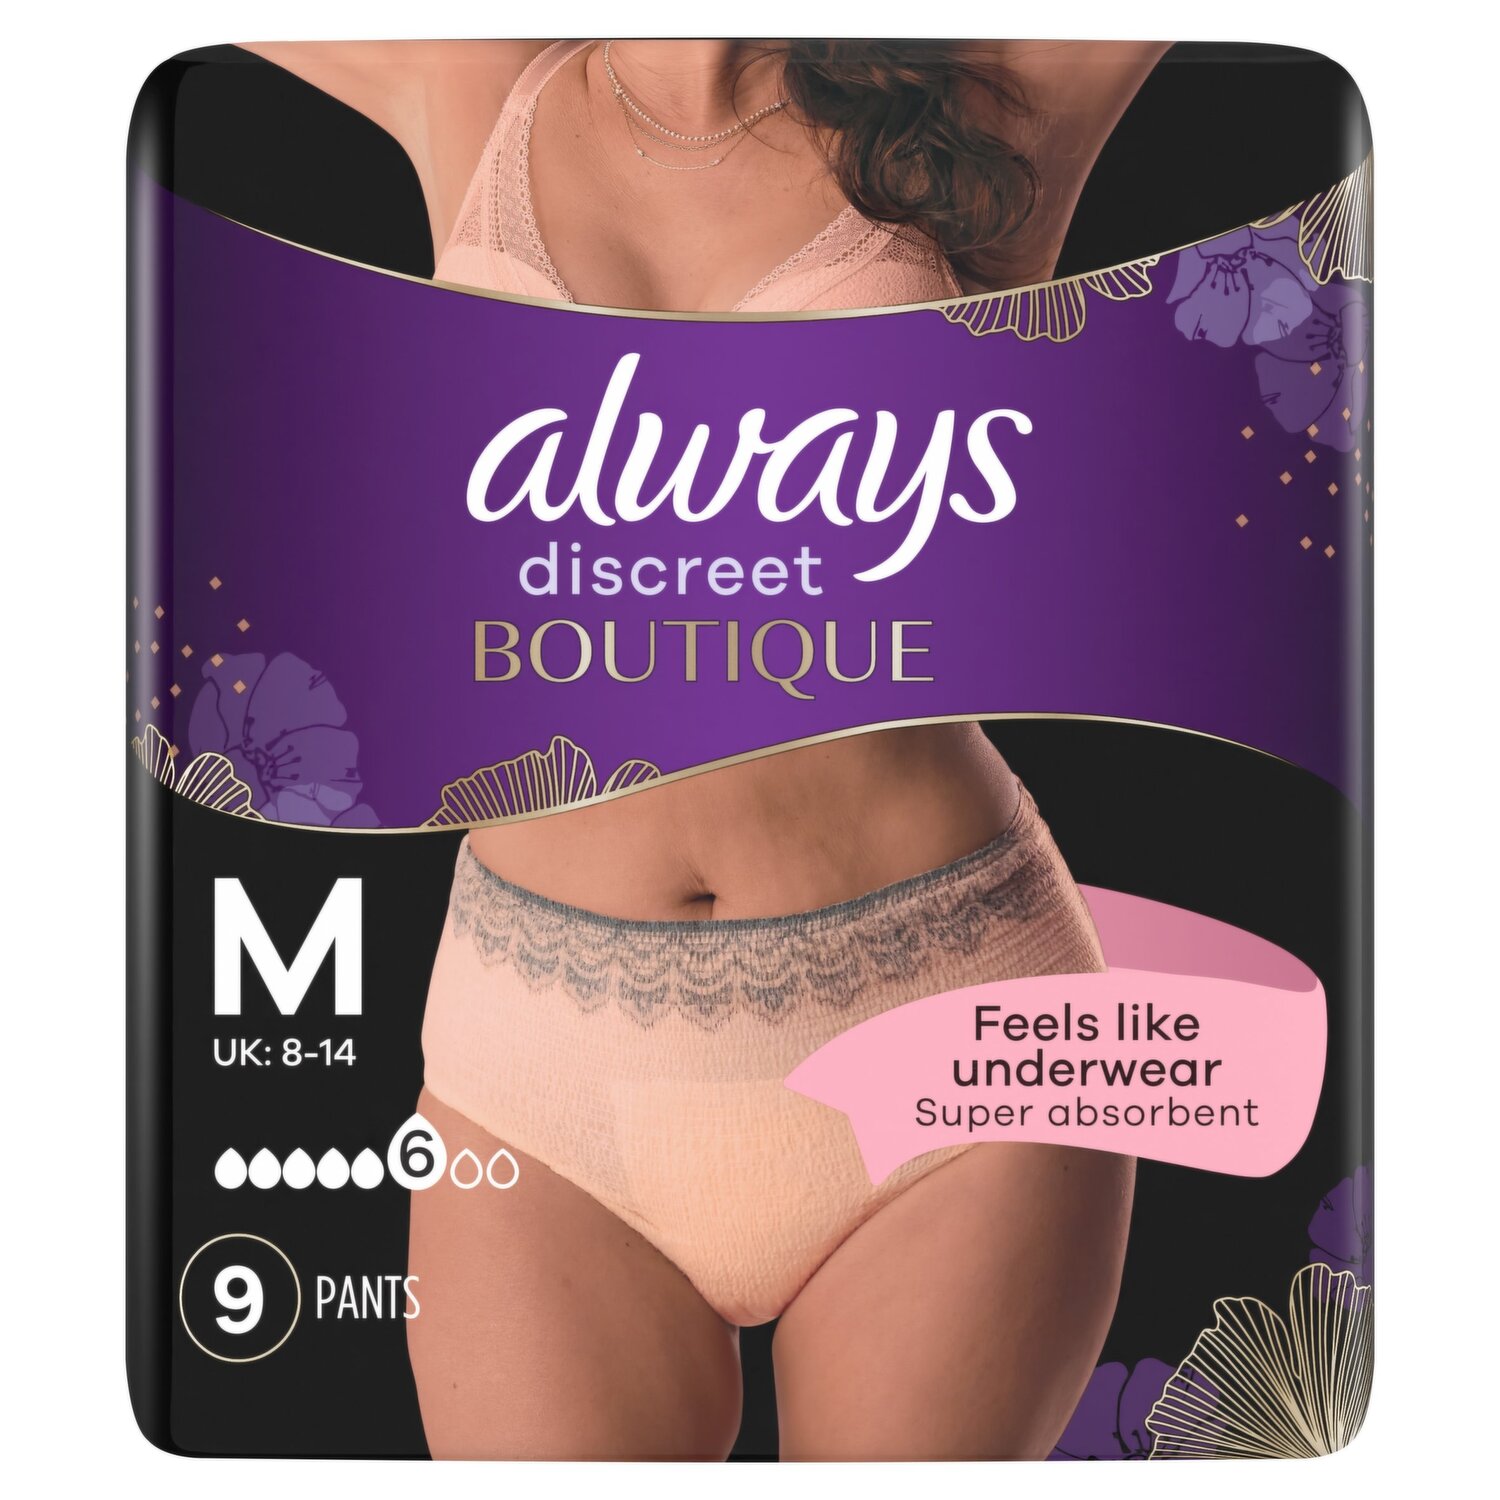 Always Discreet Boutique Underwear - Peach Medium Case 2 Packs of 9